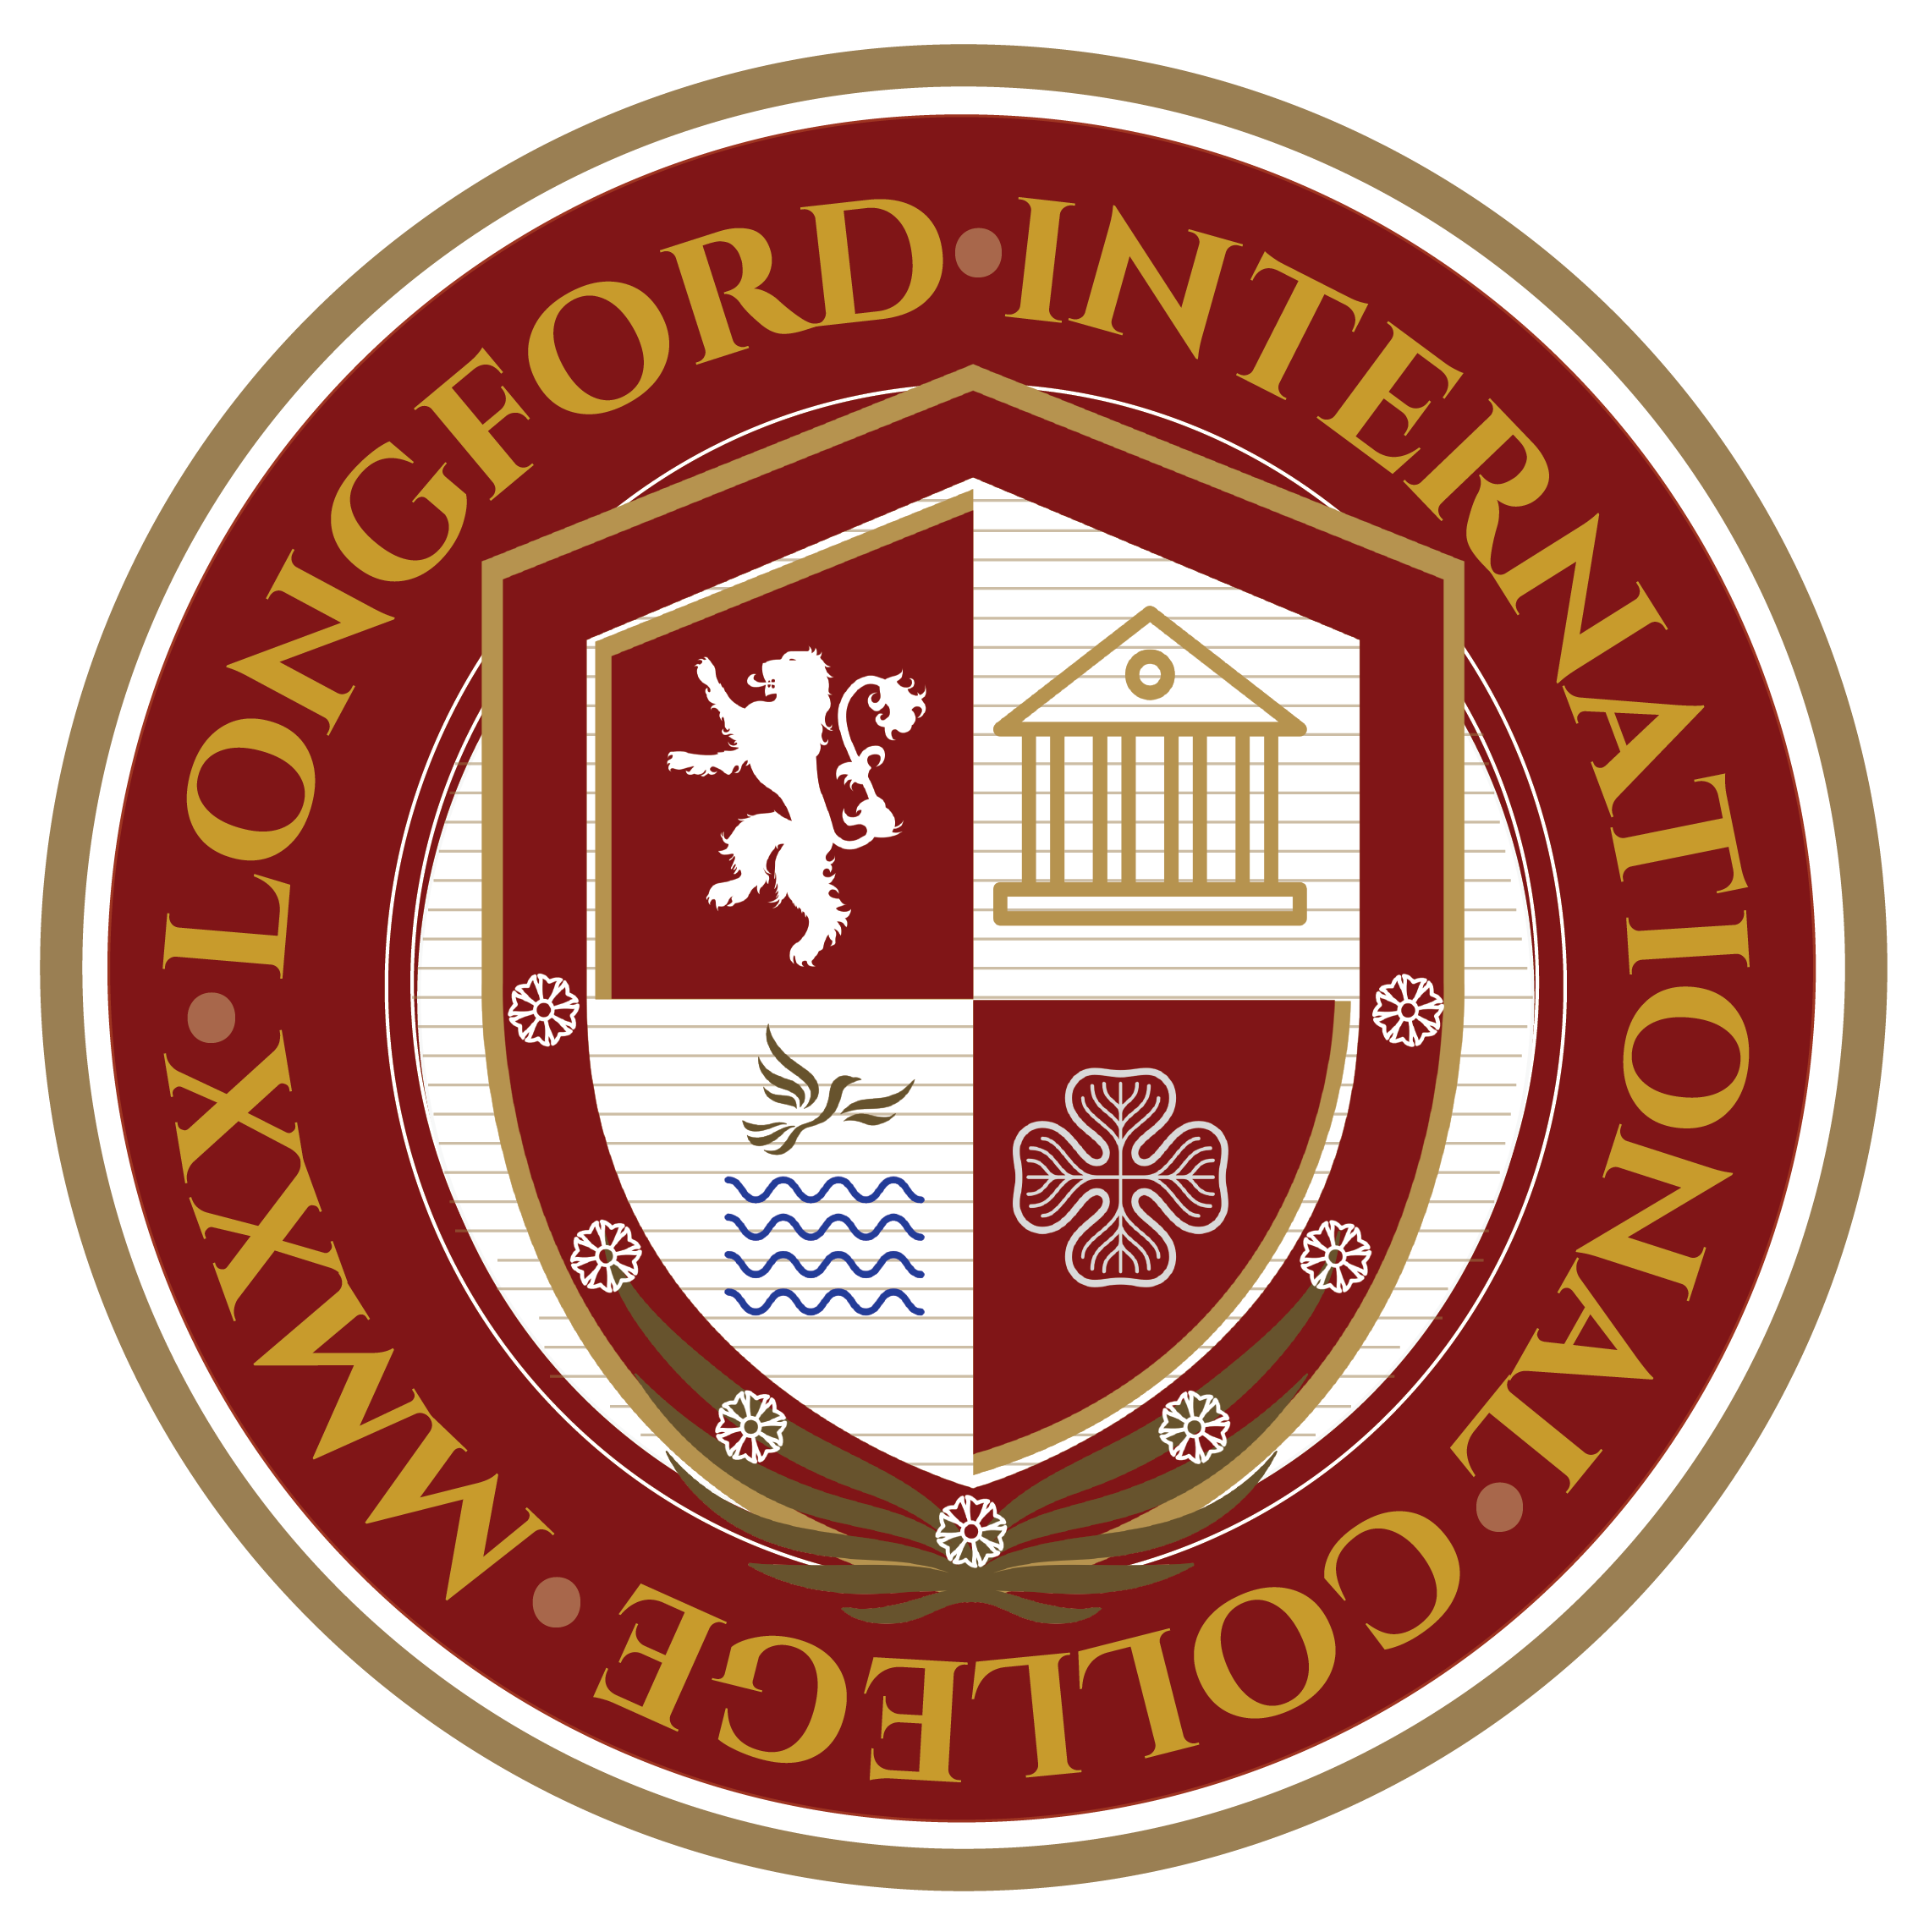 Longford International College